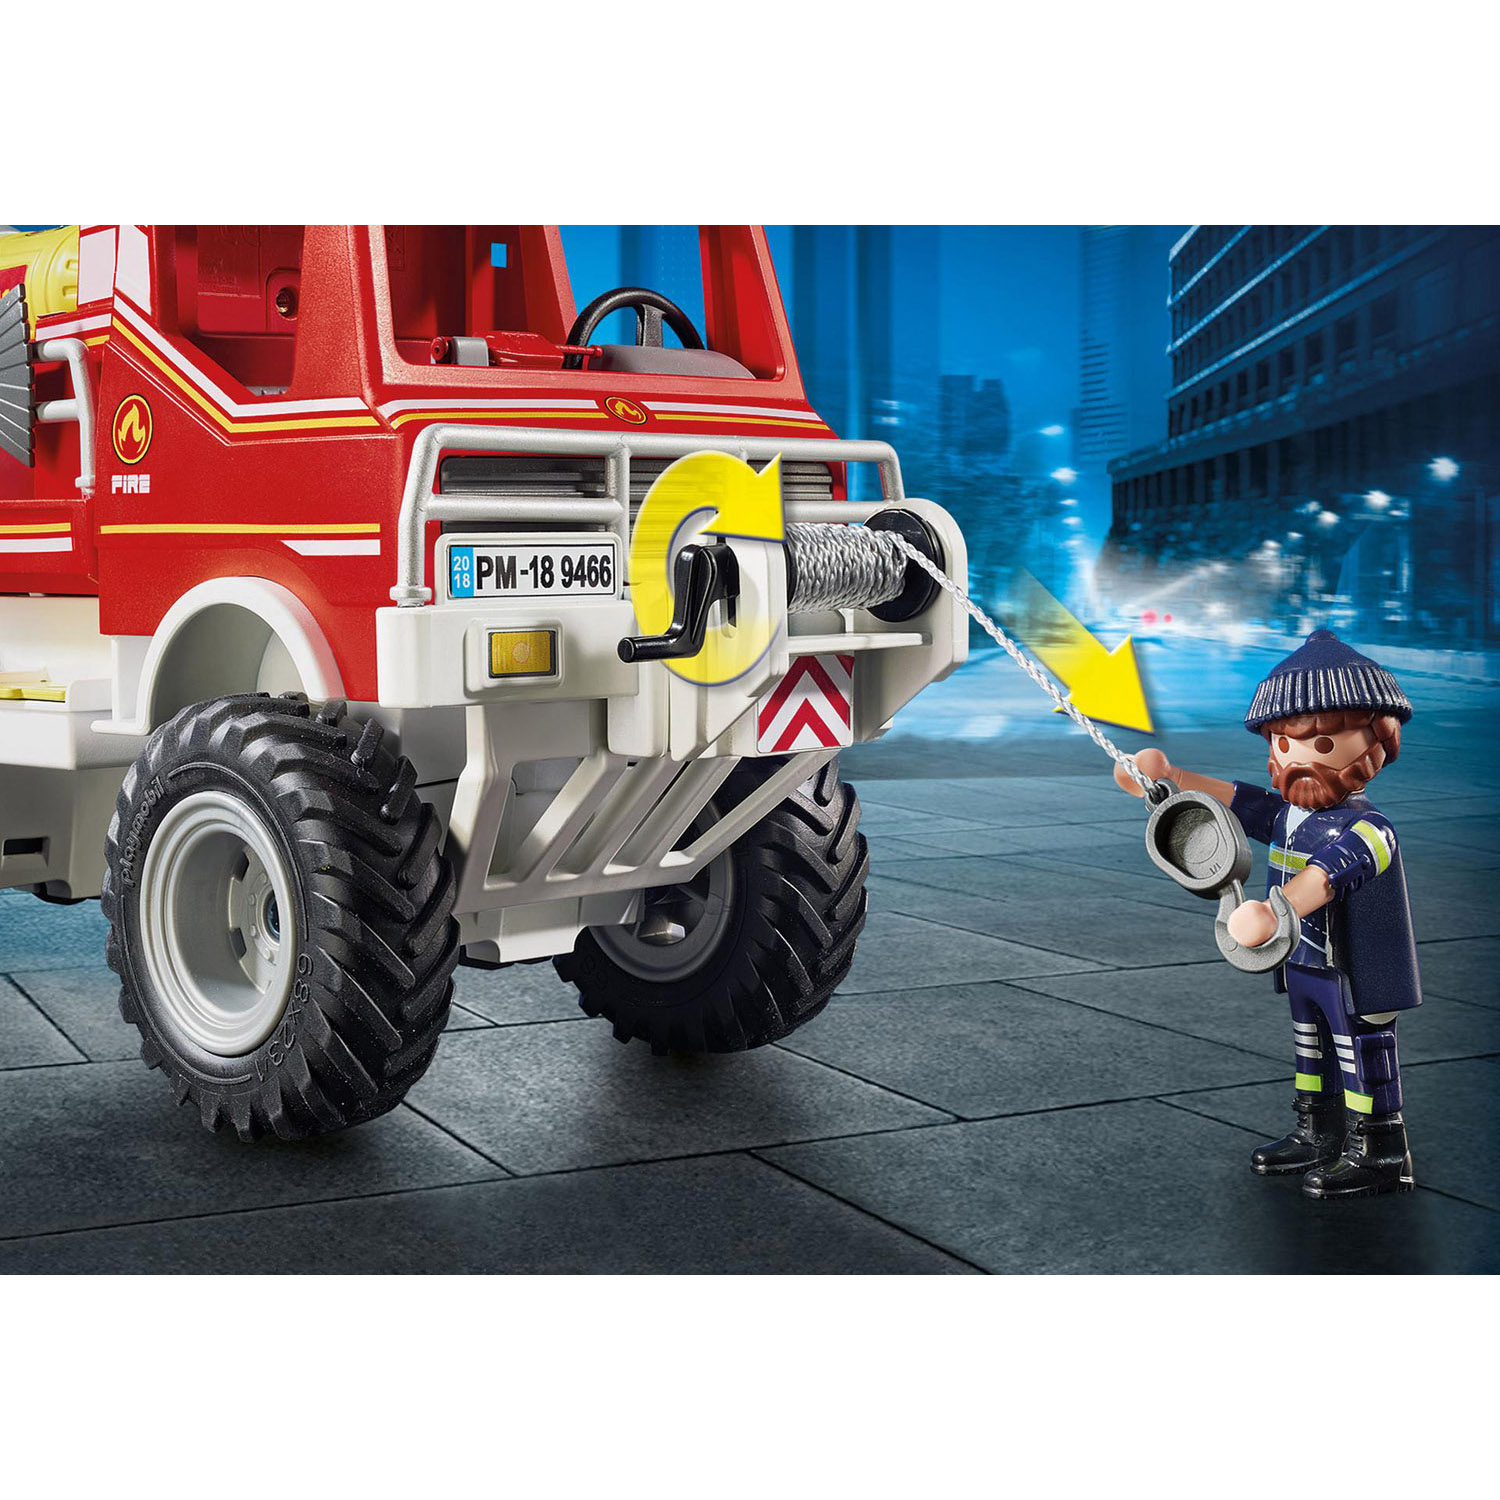 Playmobil Конструктор Пожарная машина 9466pm - фото 3